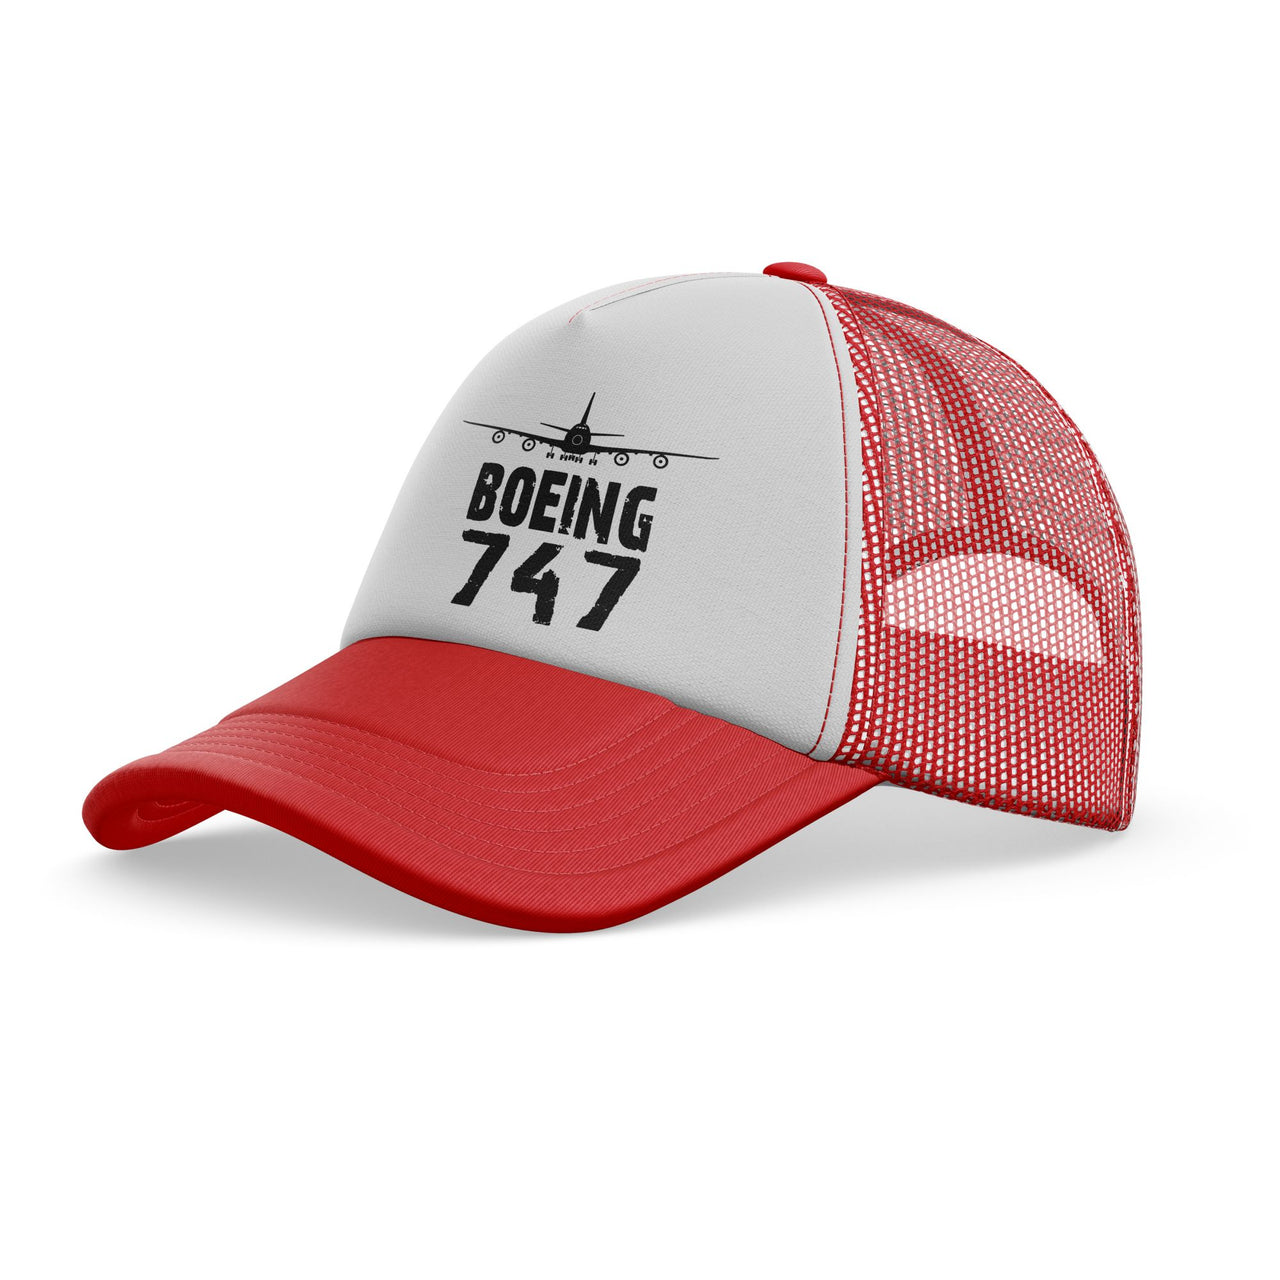 Boeing 747 & Plane Designed Trucker Caps & Hats